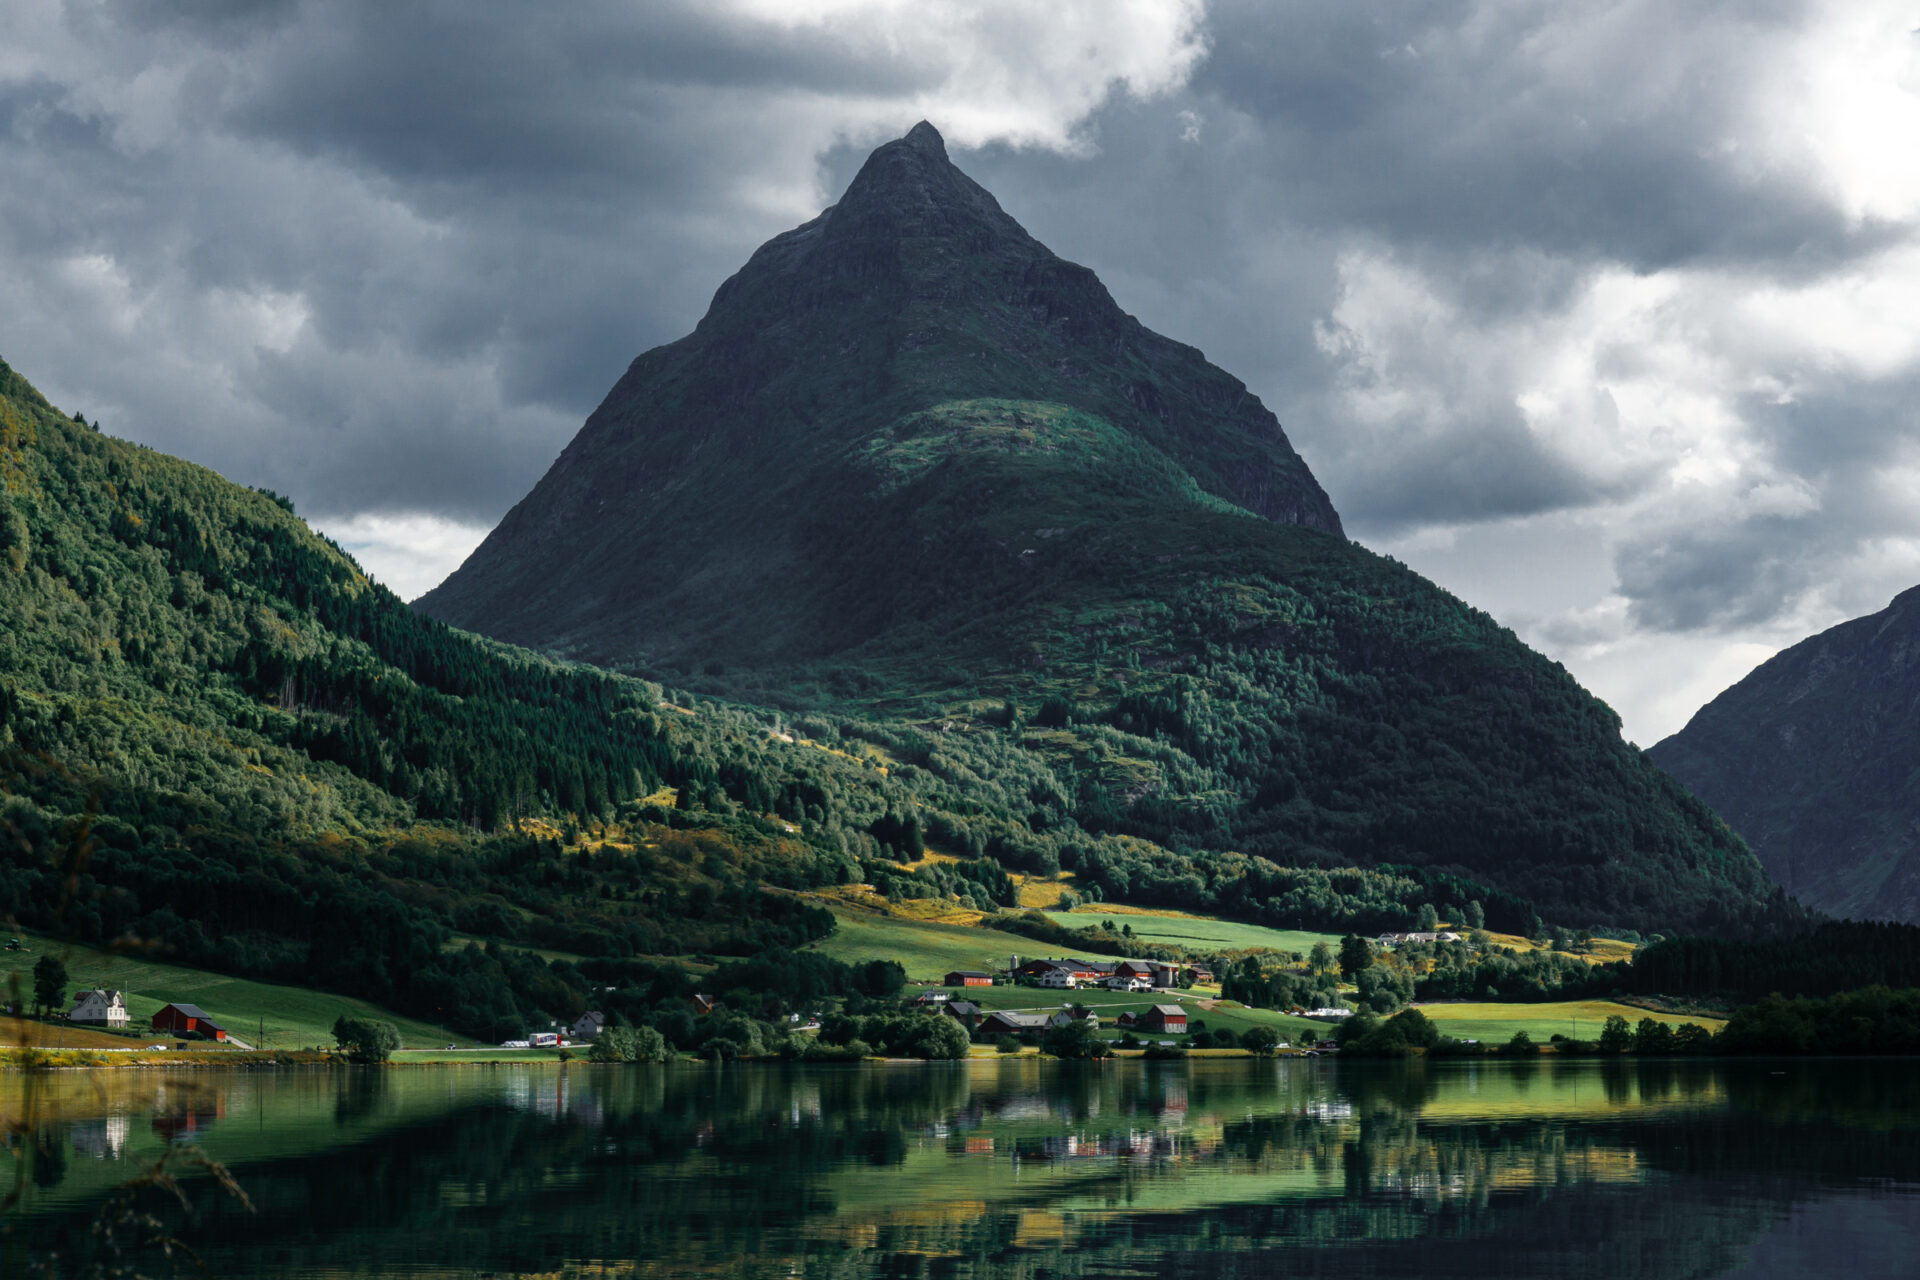 Norwegian mountains